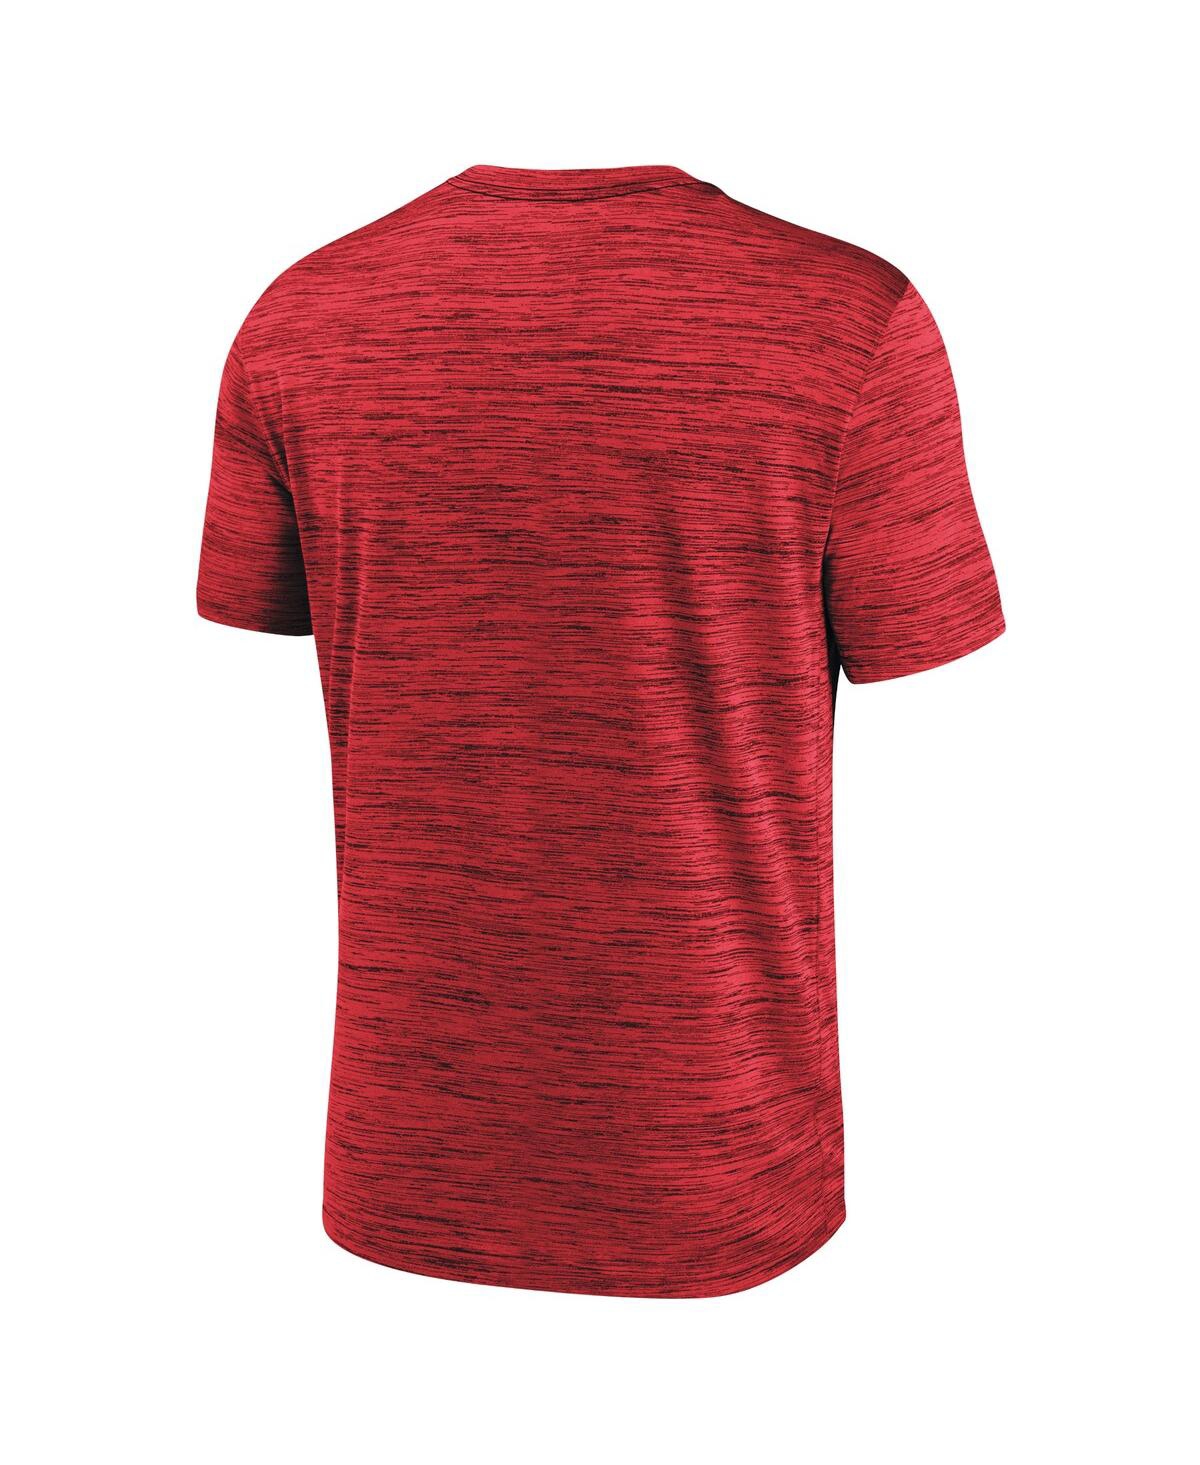 Shop Nike Men's  Red St. Louis Cardinals Wordmark Velocity Performance T-shirt